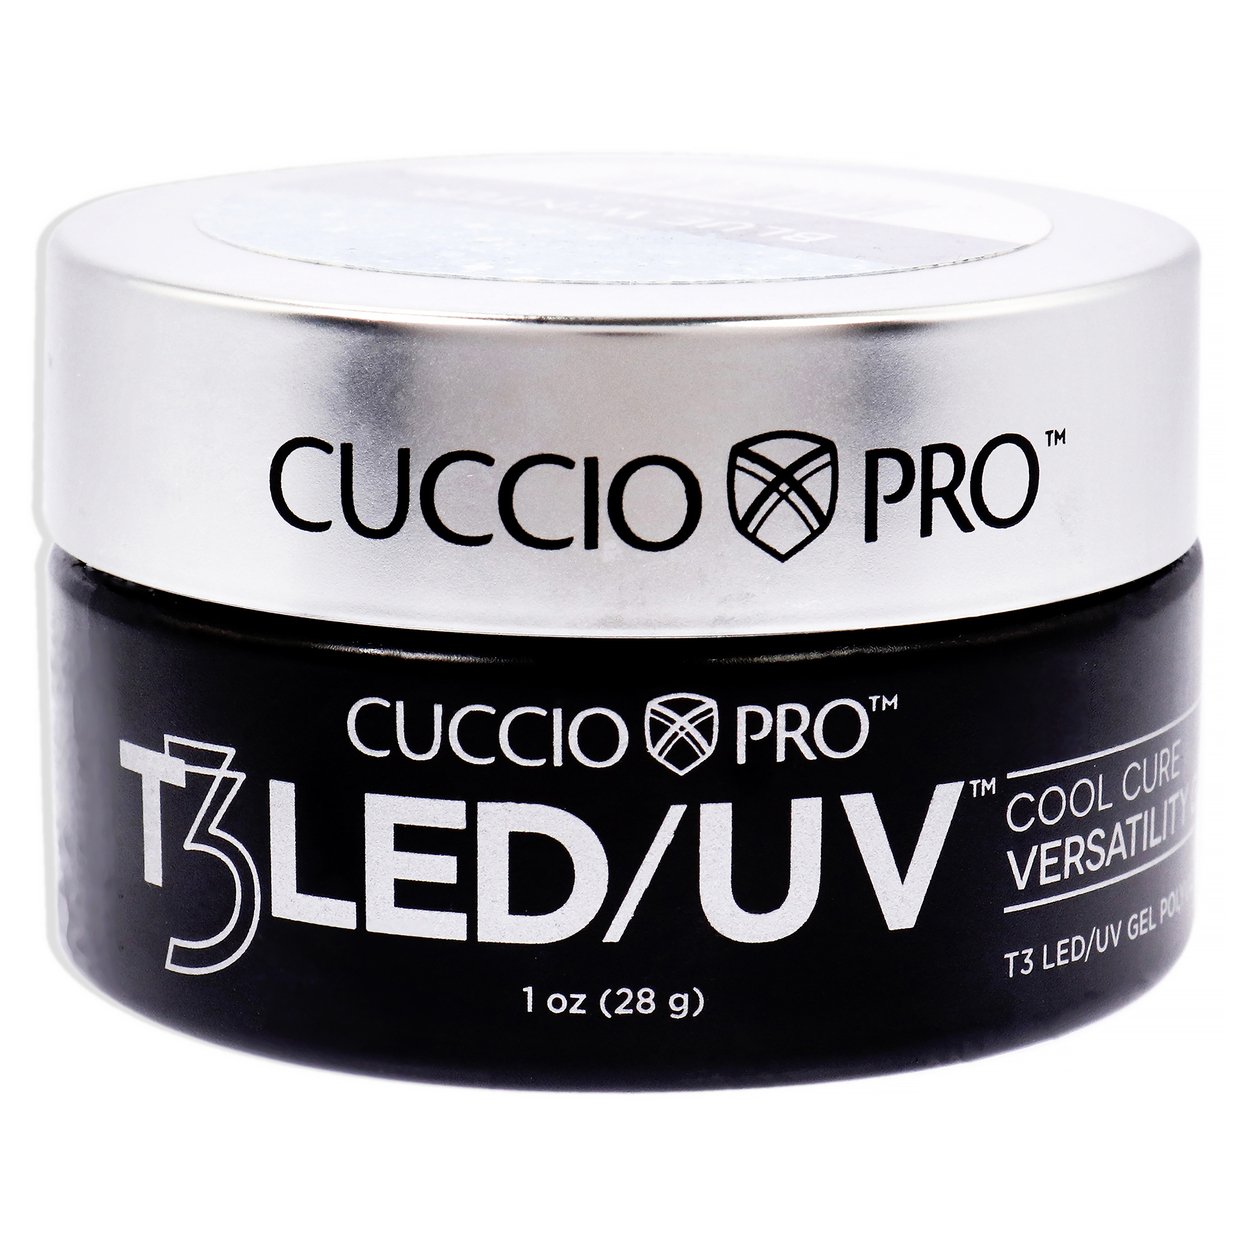 Cuccio Pro T3 Cool Cure Versatility Gel - Blue Winter Nail Gel 1 Oz